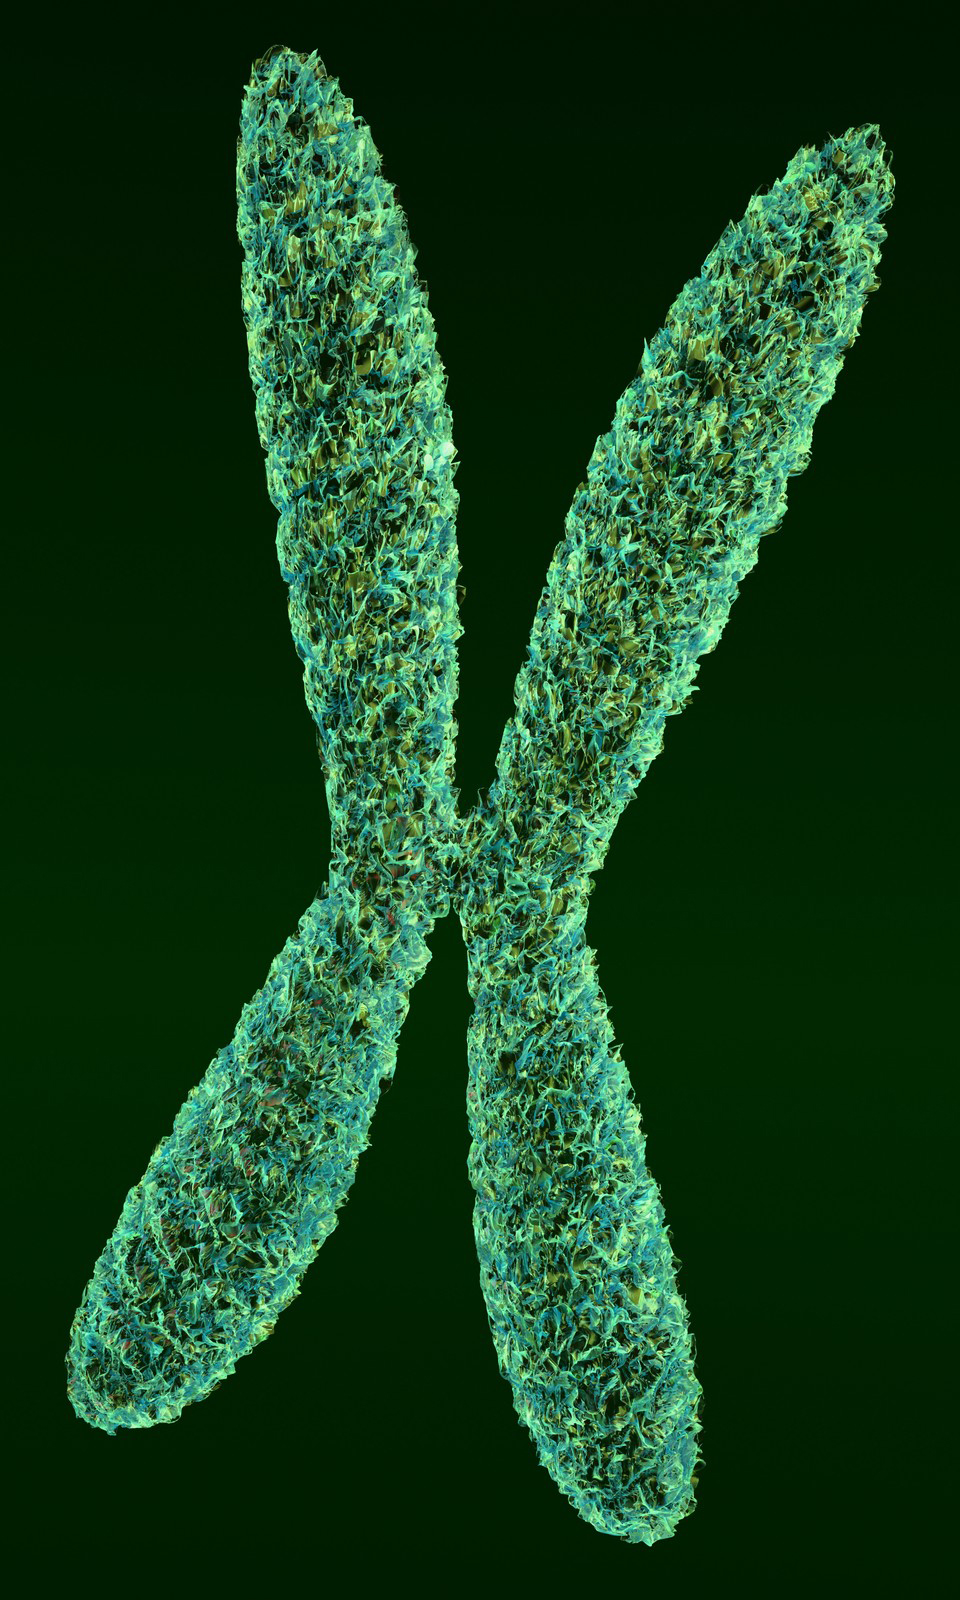 Biological Molecular Image - Chromosome